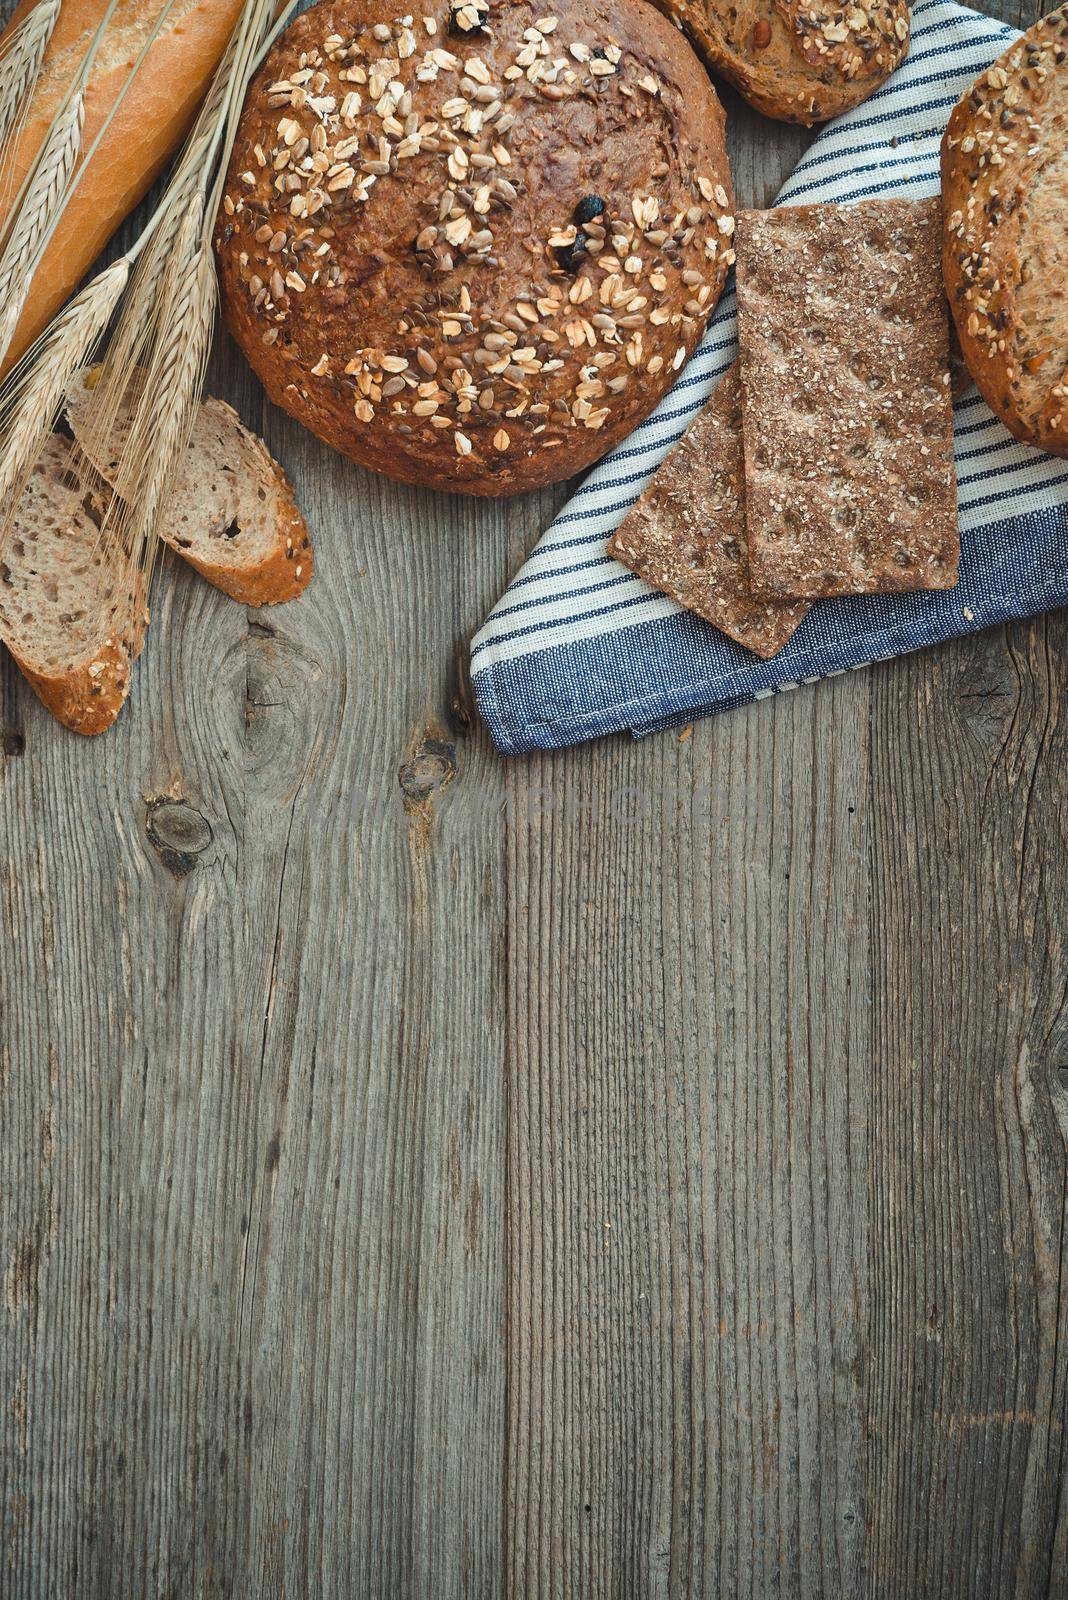 bread on a wooden background by tan4ikk1